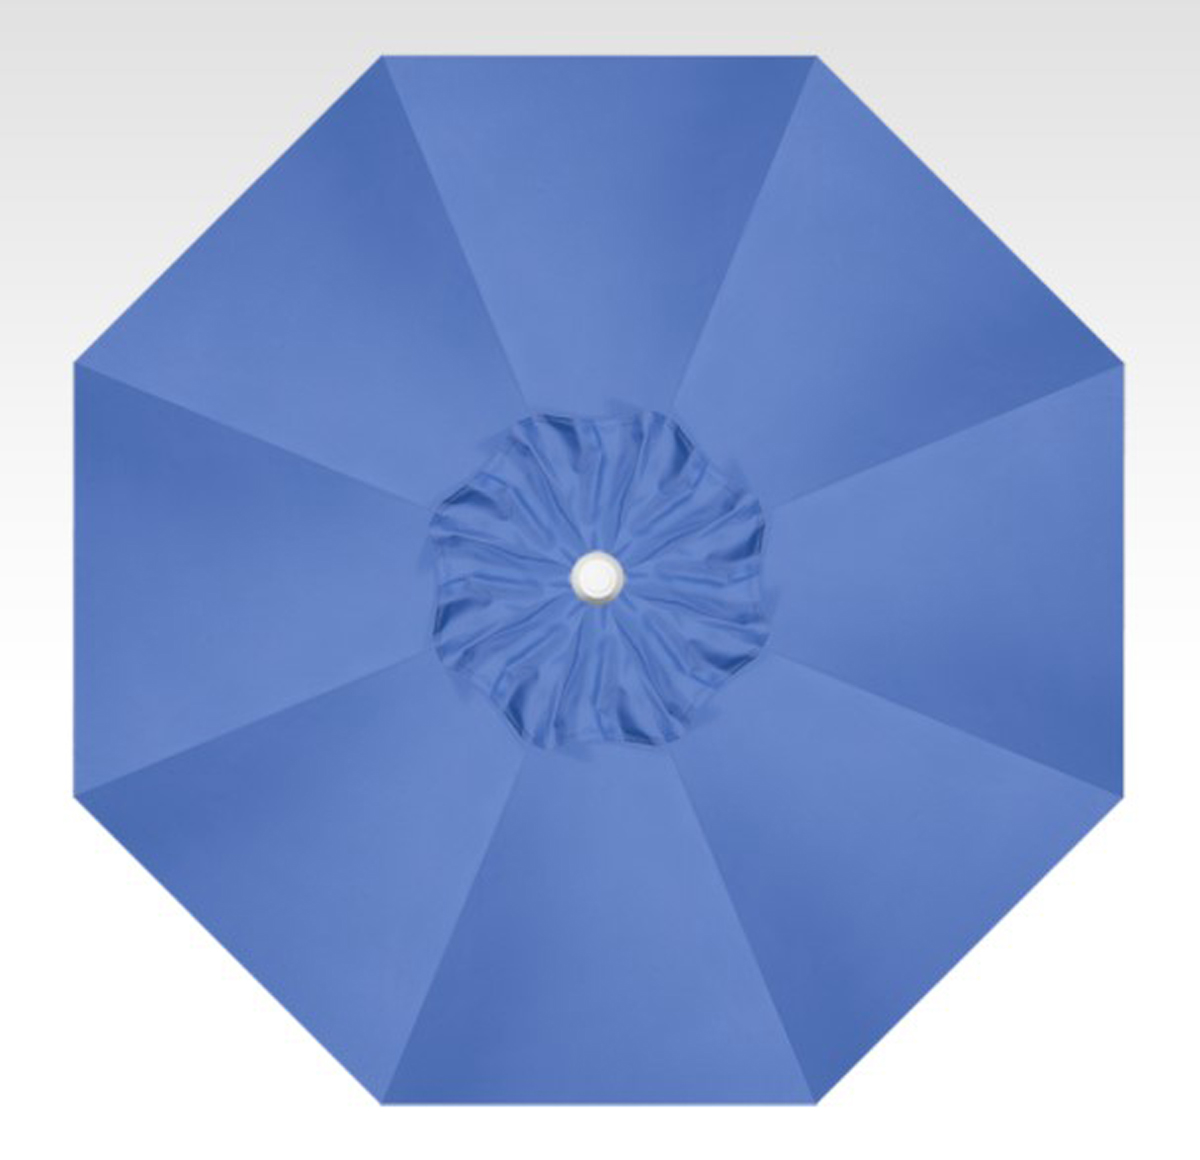 9′ sky blue push-button tilt umbrella – white frame thumbnail image